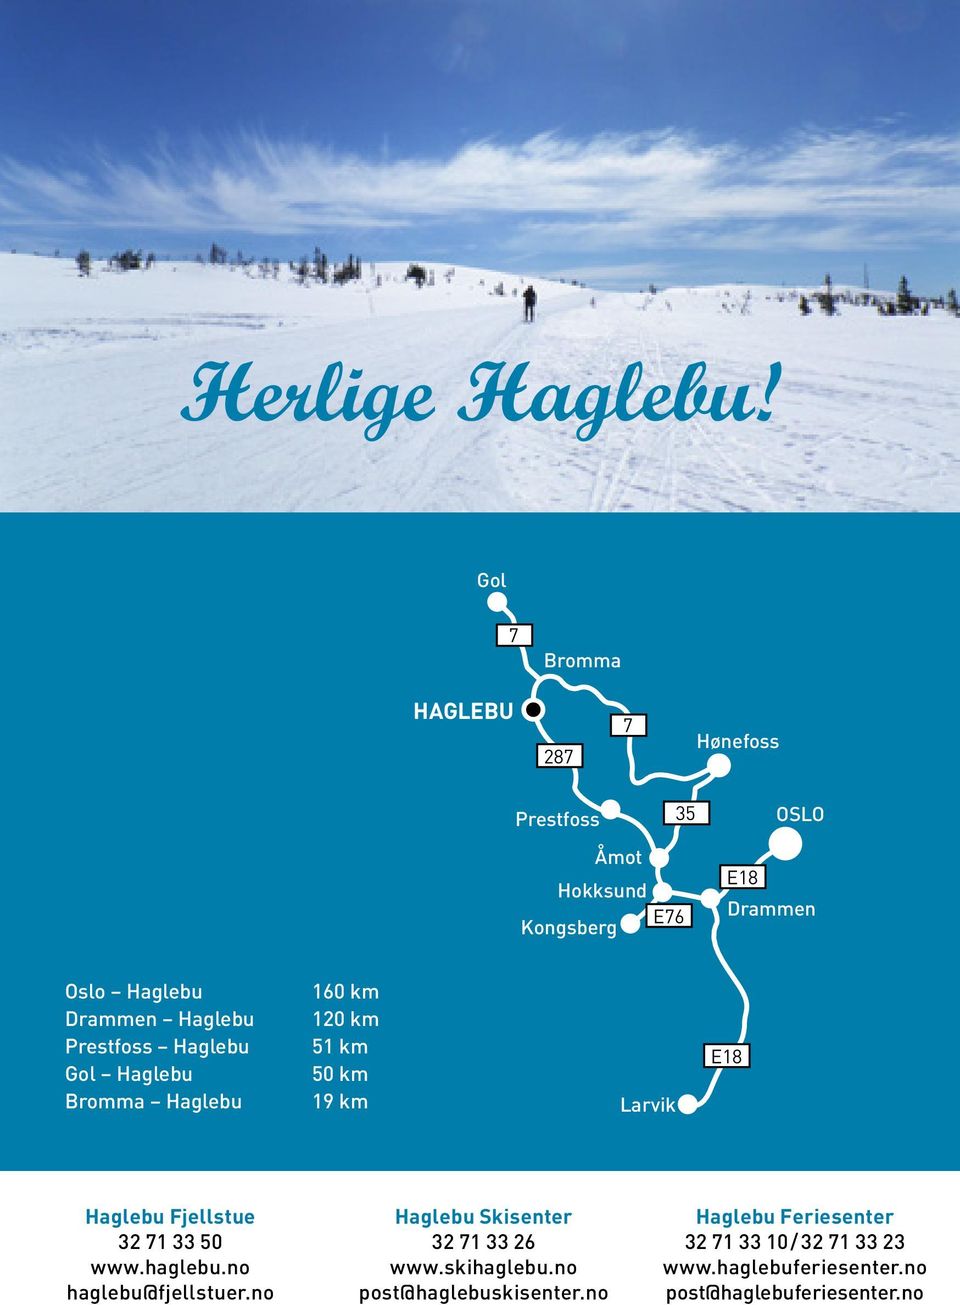 Drammen Haglebu Prestfoss Haglebu Gol Haglebu Bromma Haglebu 160 km 120 km 51 km 50 km 19 km Larvik E18 32 71